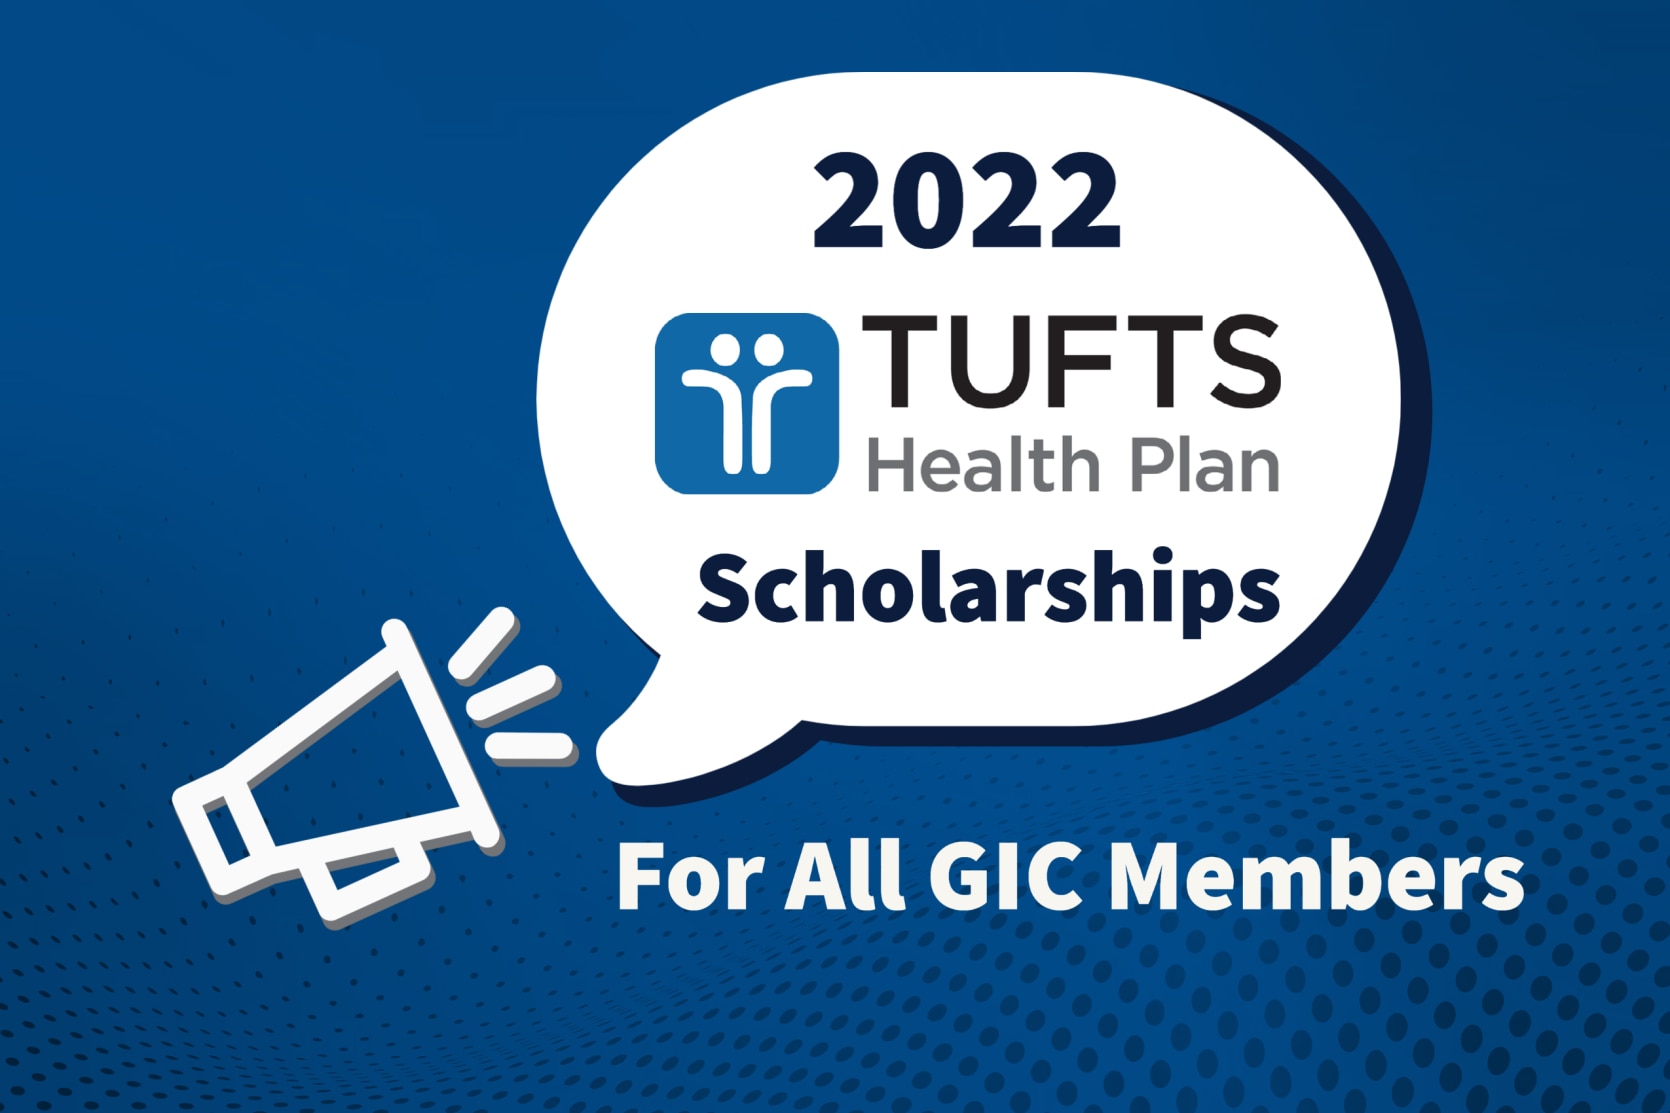 2022 Tufts Health Plan Scholarships for GIC Members